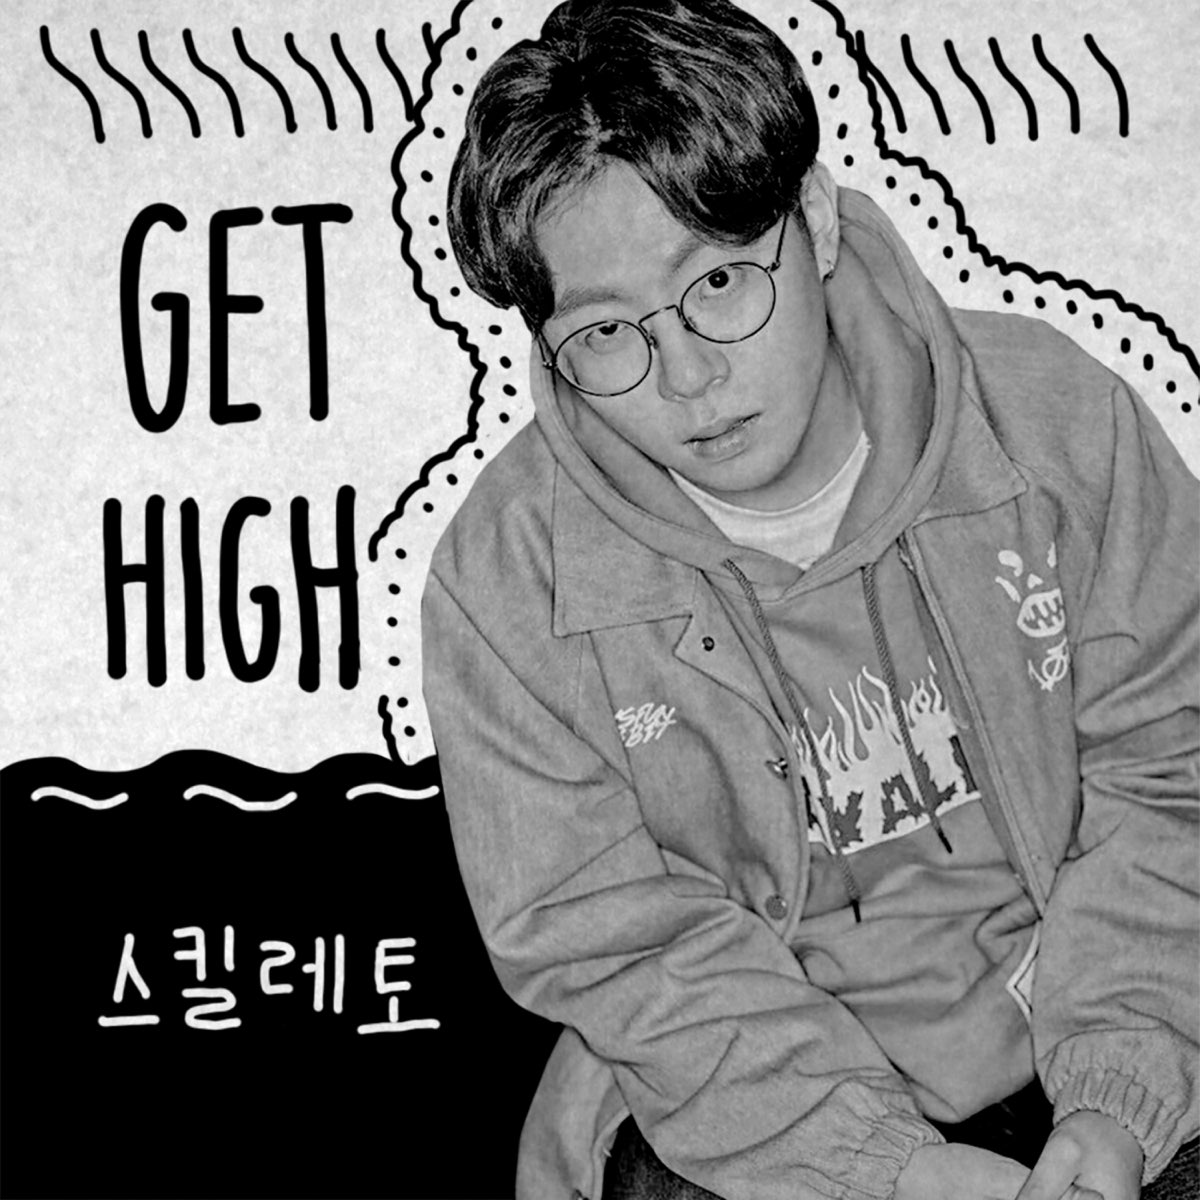 Who get high. Get High. Lets go get High.